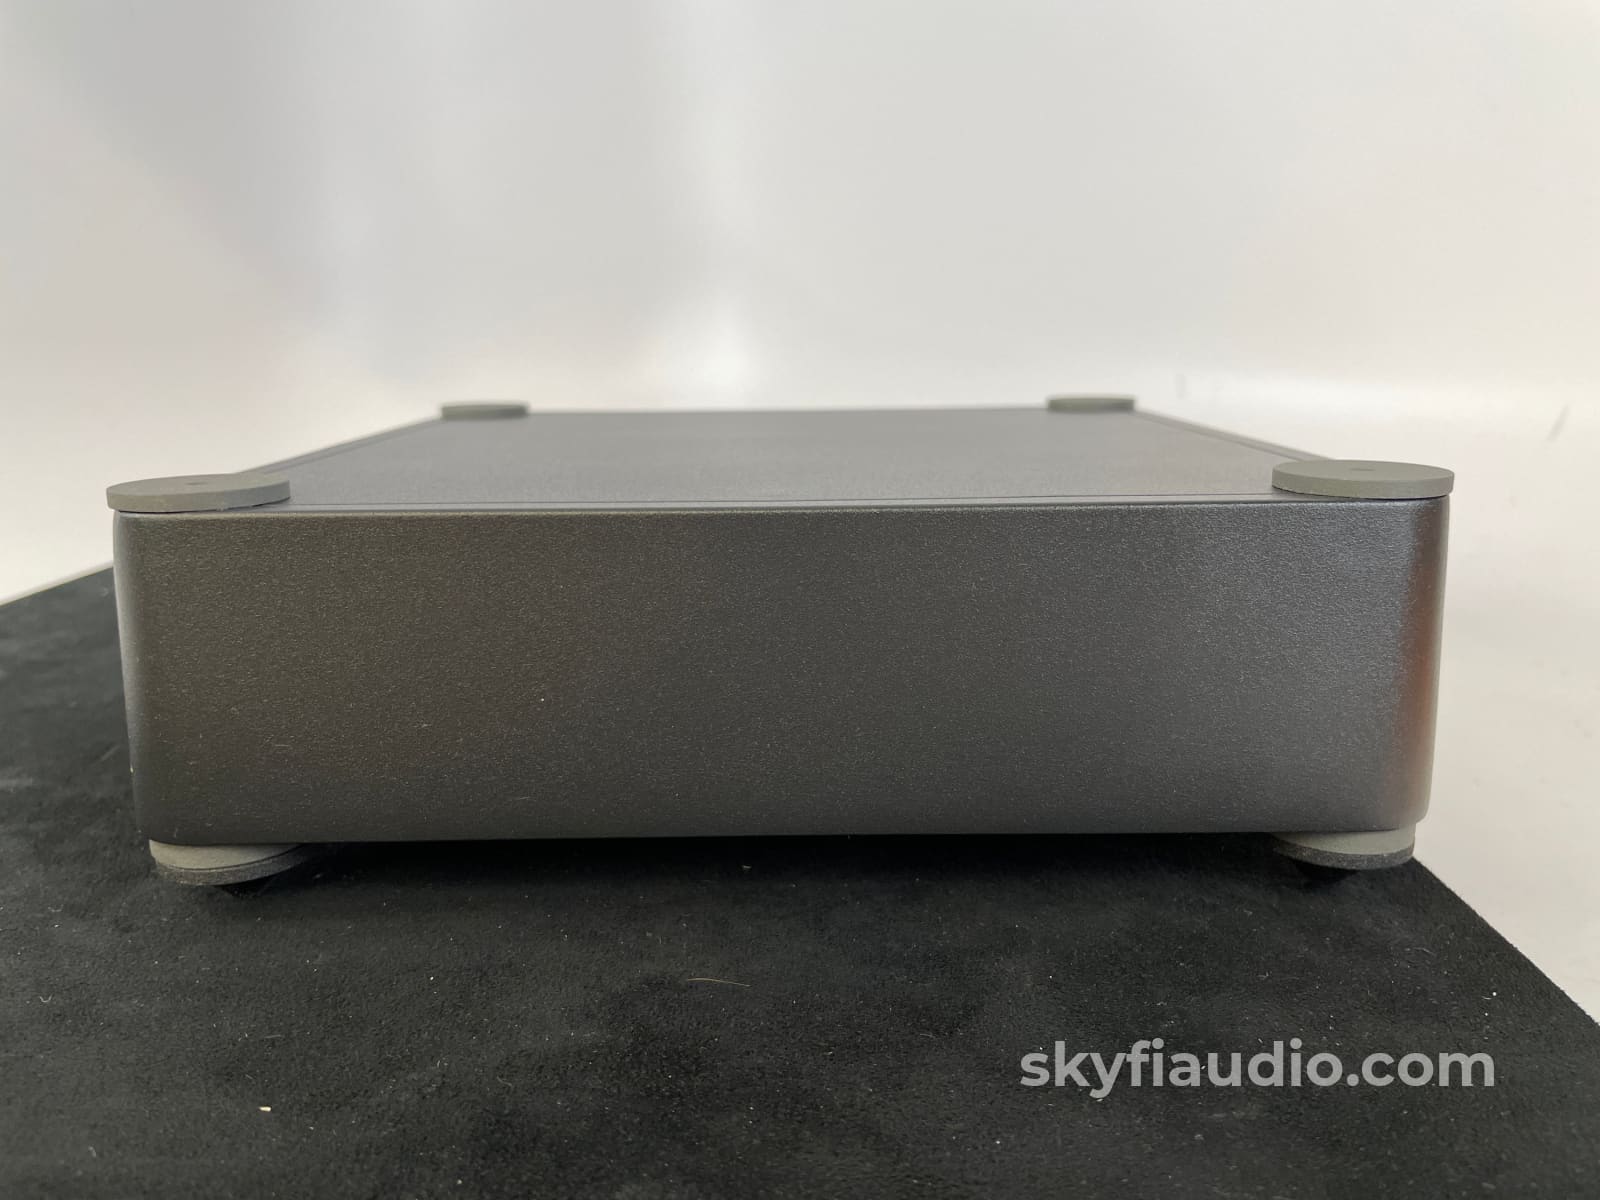 Wadia Digital 151 Powerdac Mini Integrated Amplifier - New In Box Cd +